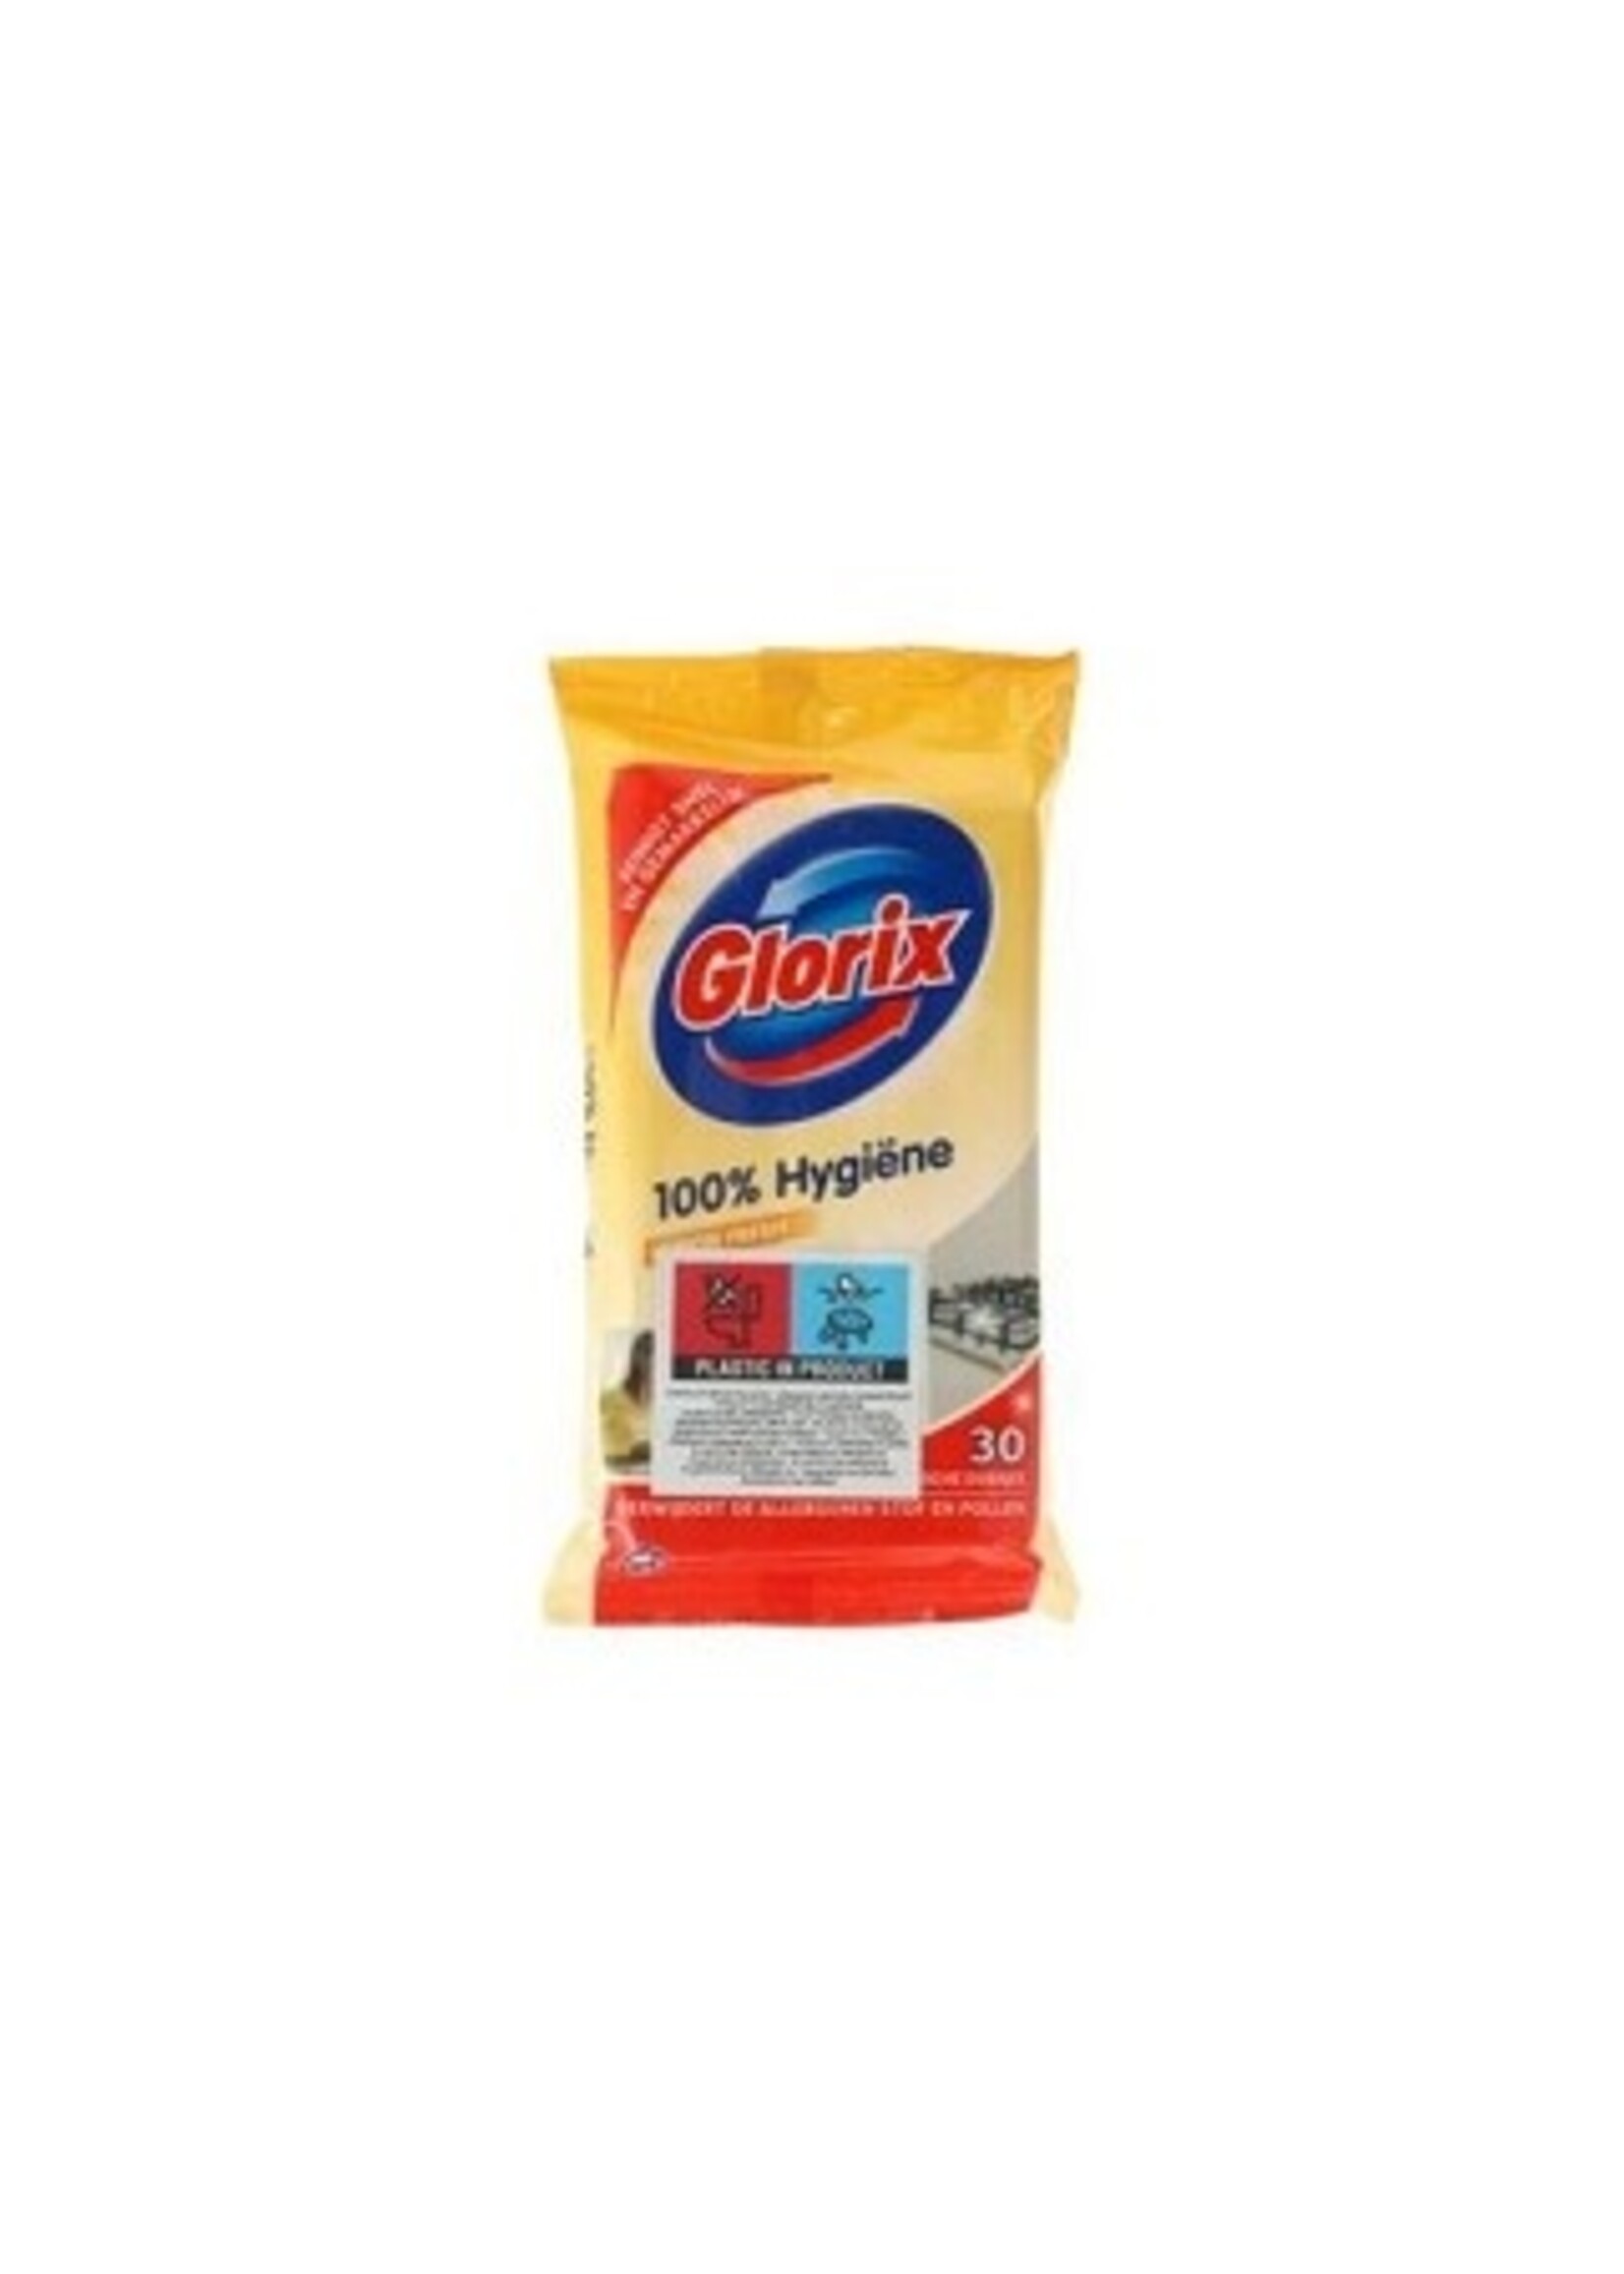 Glorix Cleaning Wipes 30pcs Lemon Fresh 100% Hygiene